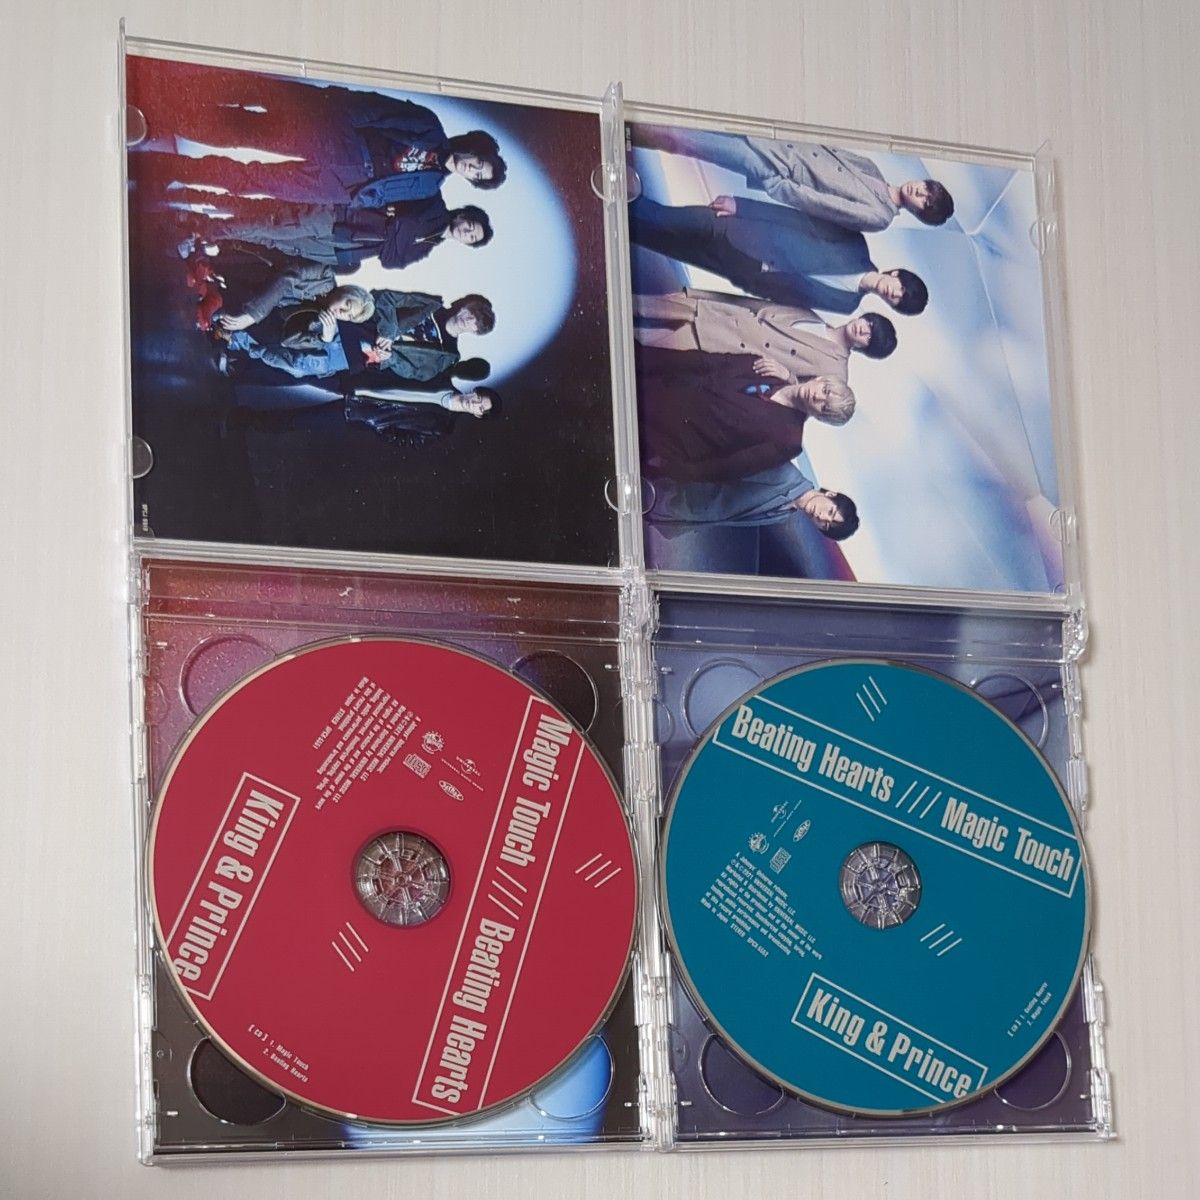 King & Princeシングル Magic Touch/Bearting Hearts 初回限定盤A.B 2枚セット